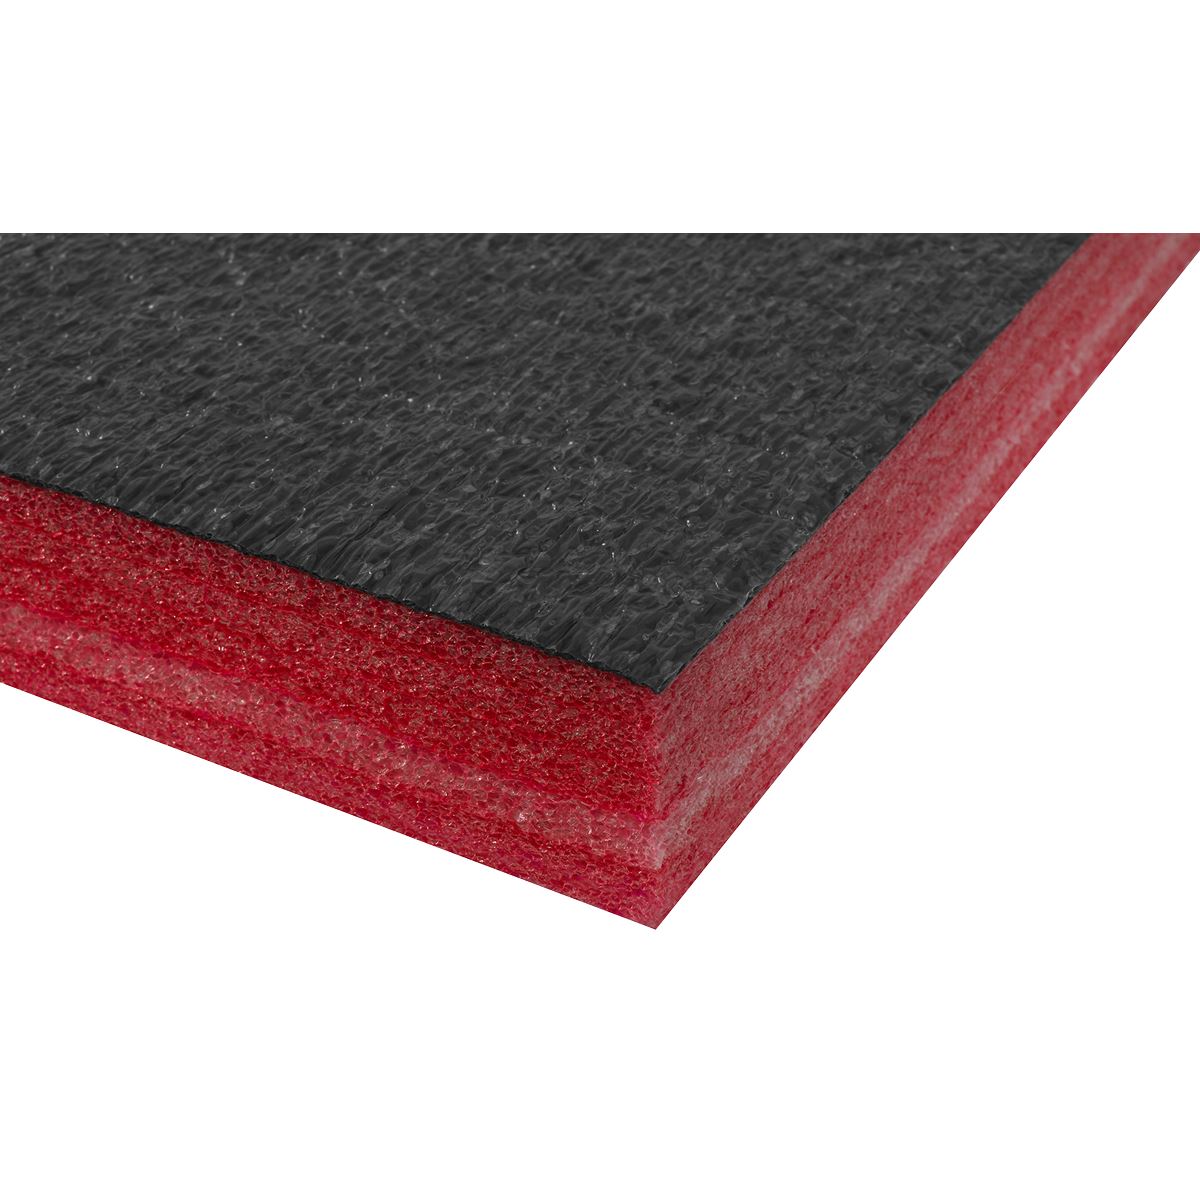 Sealey Easy Peel Shadow Foam Red Black 1200 x 550 x 50mm Tool Tray Ins